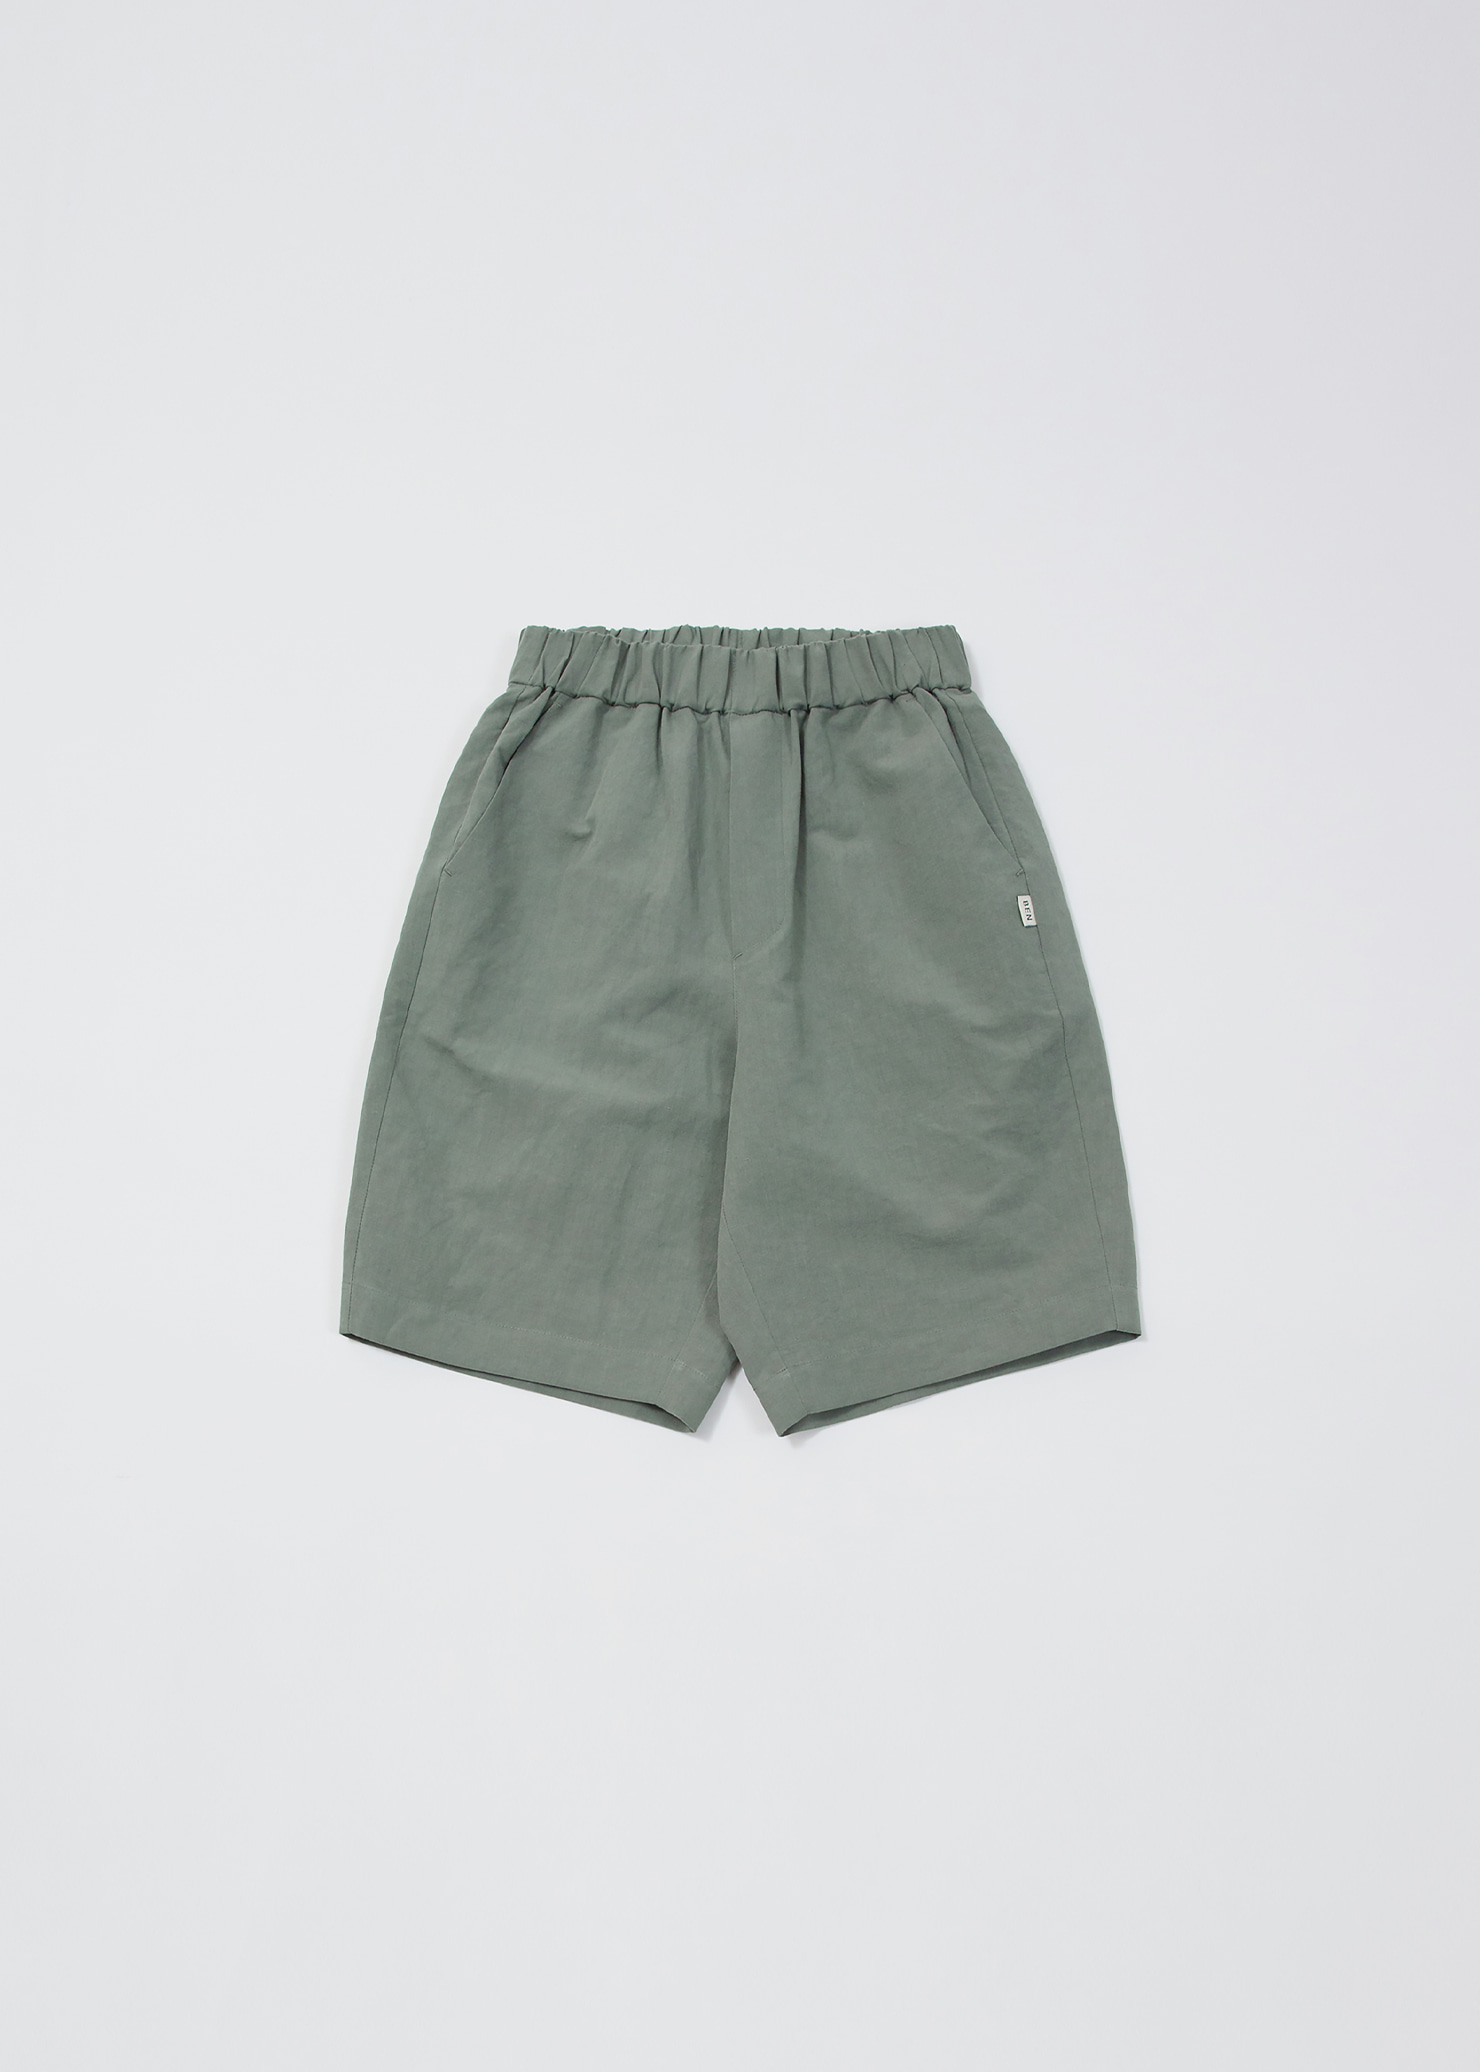 02 Linen Half Pants _ Grayish Green